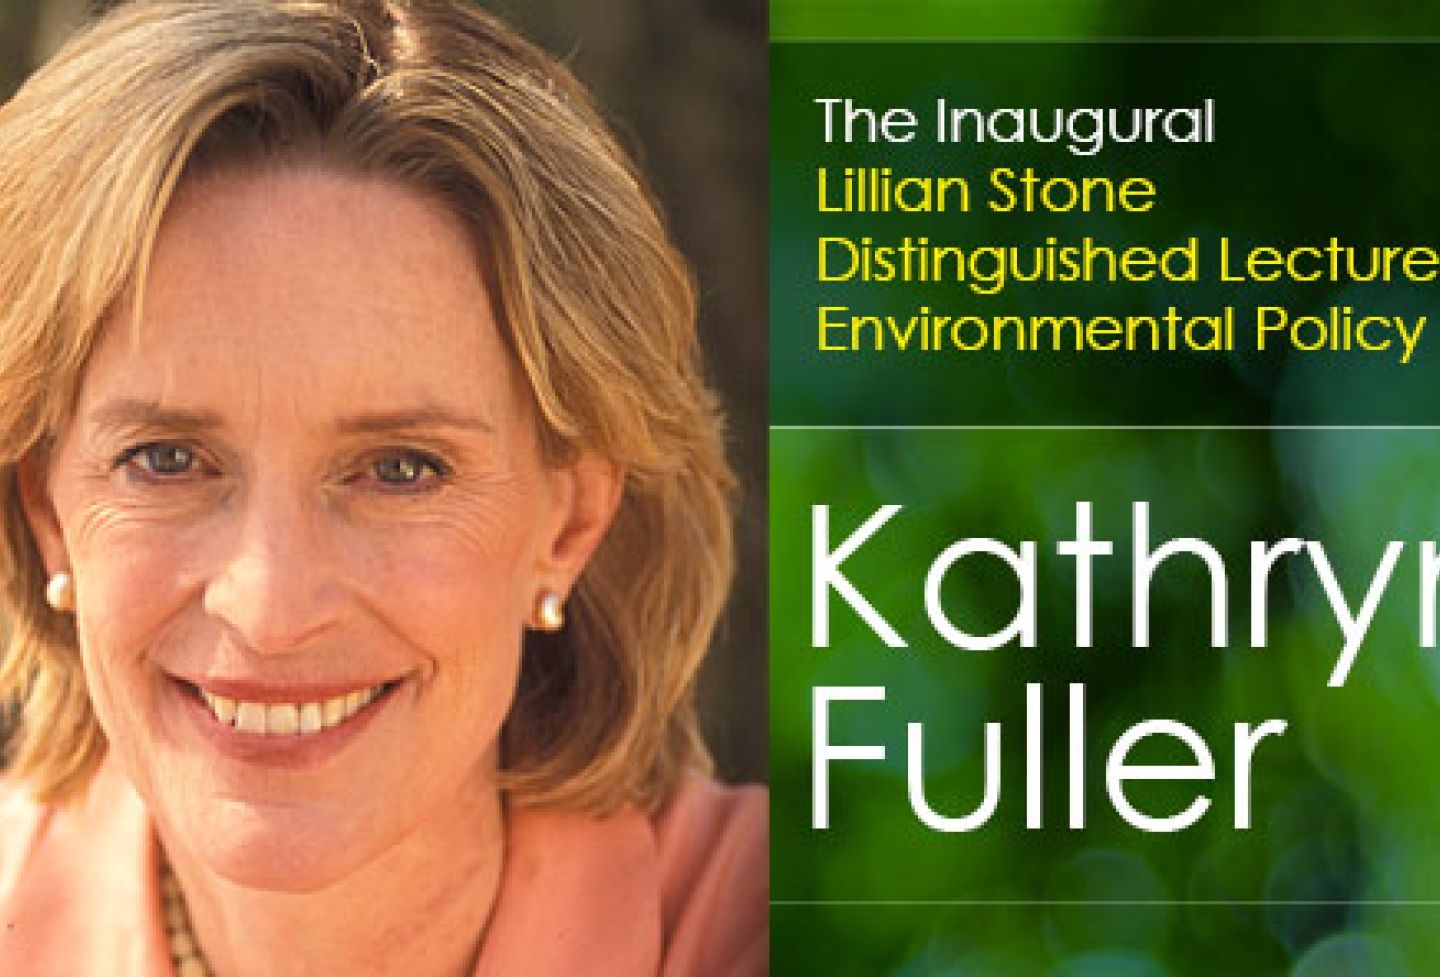 Kathryn Fuller